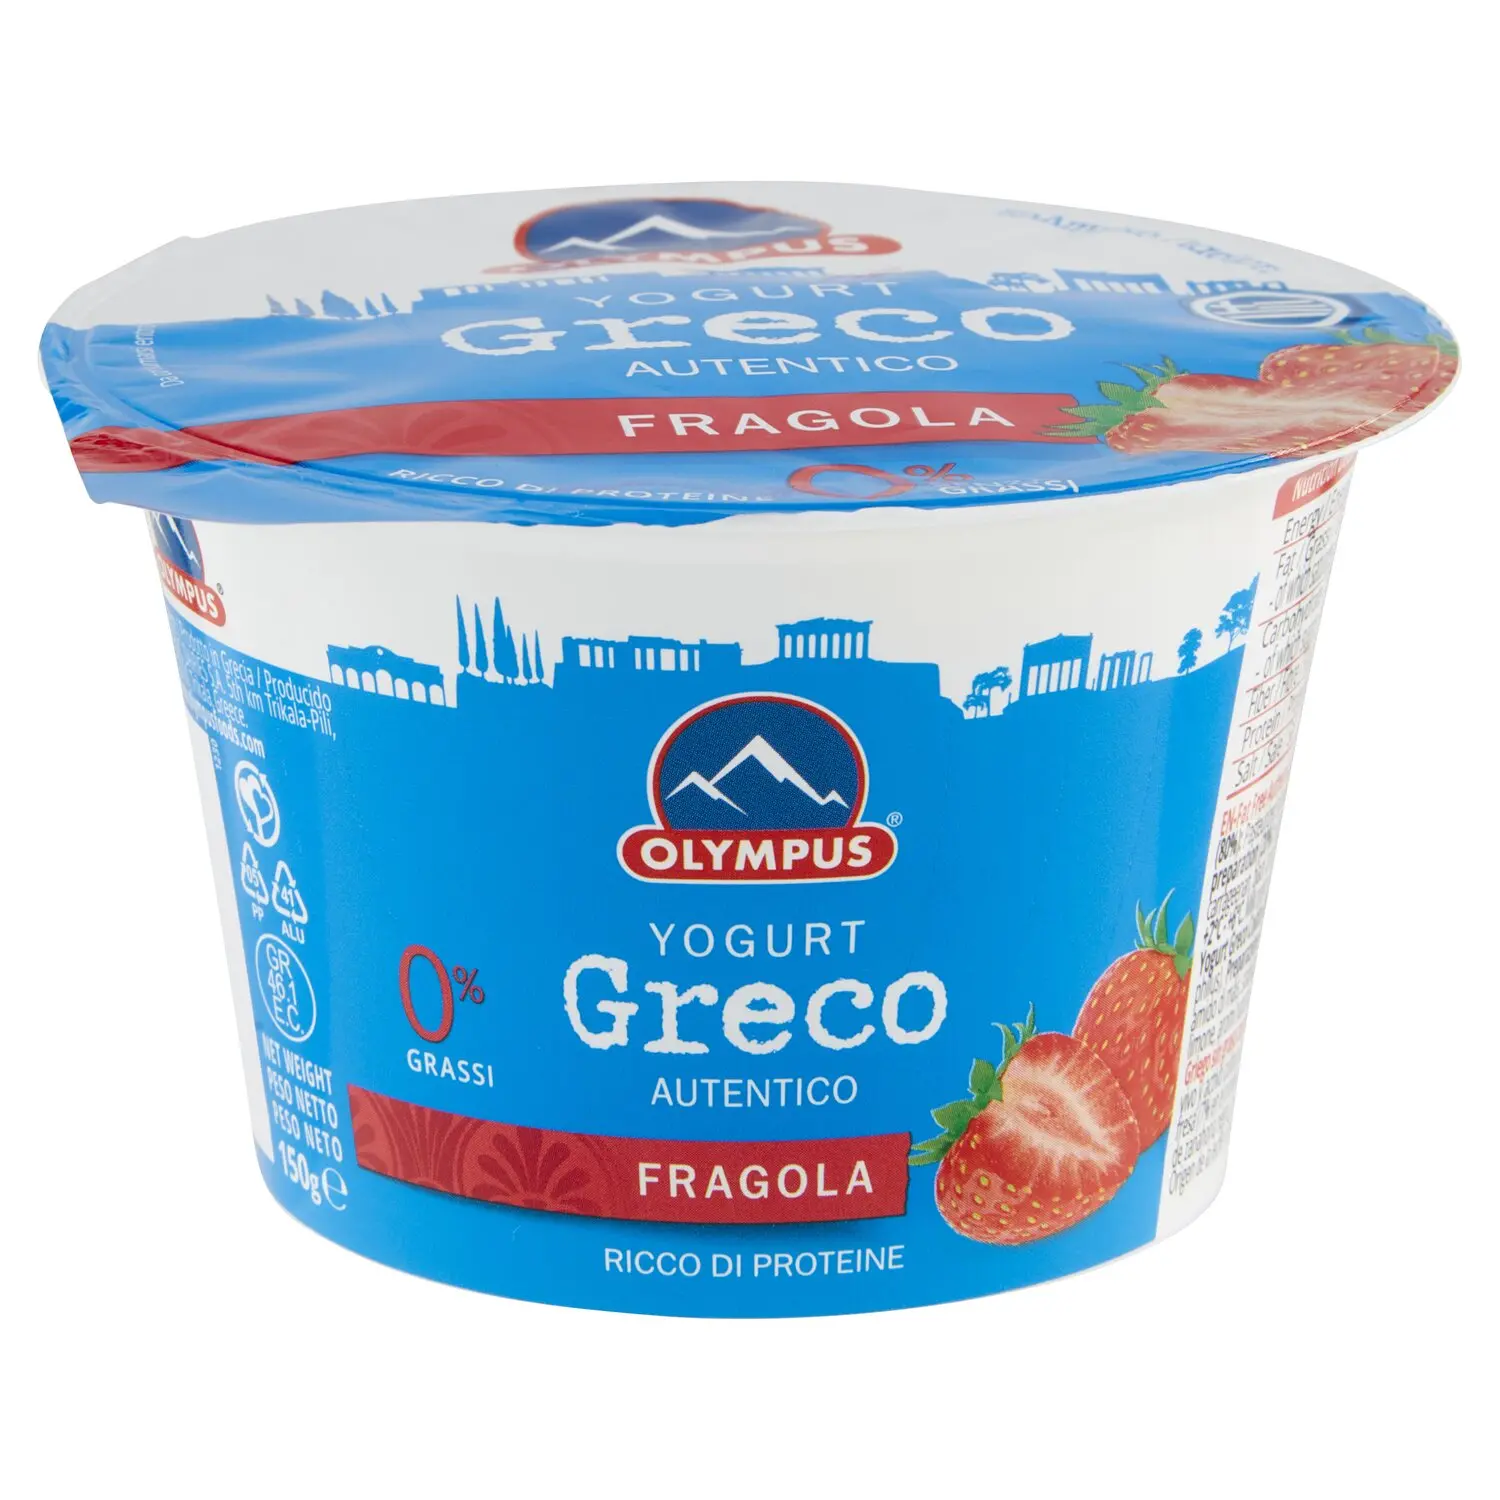 Olympus Yogurt Greco Autentico Fragola 0% Grassi 150 g